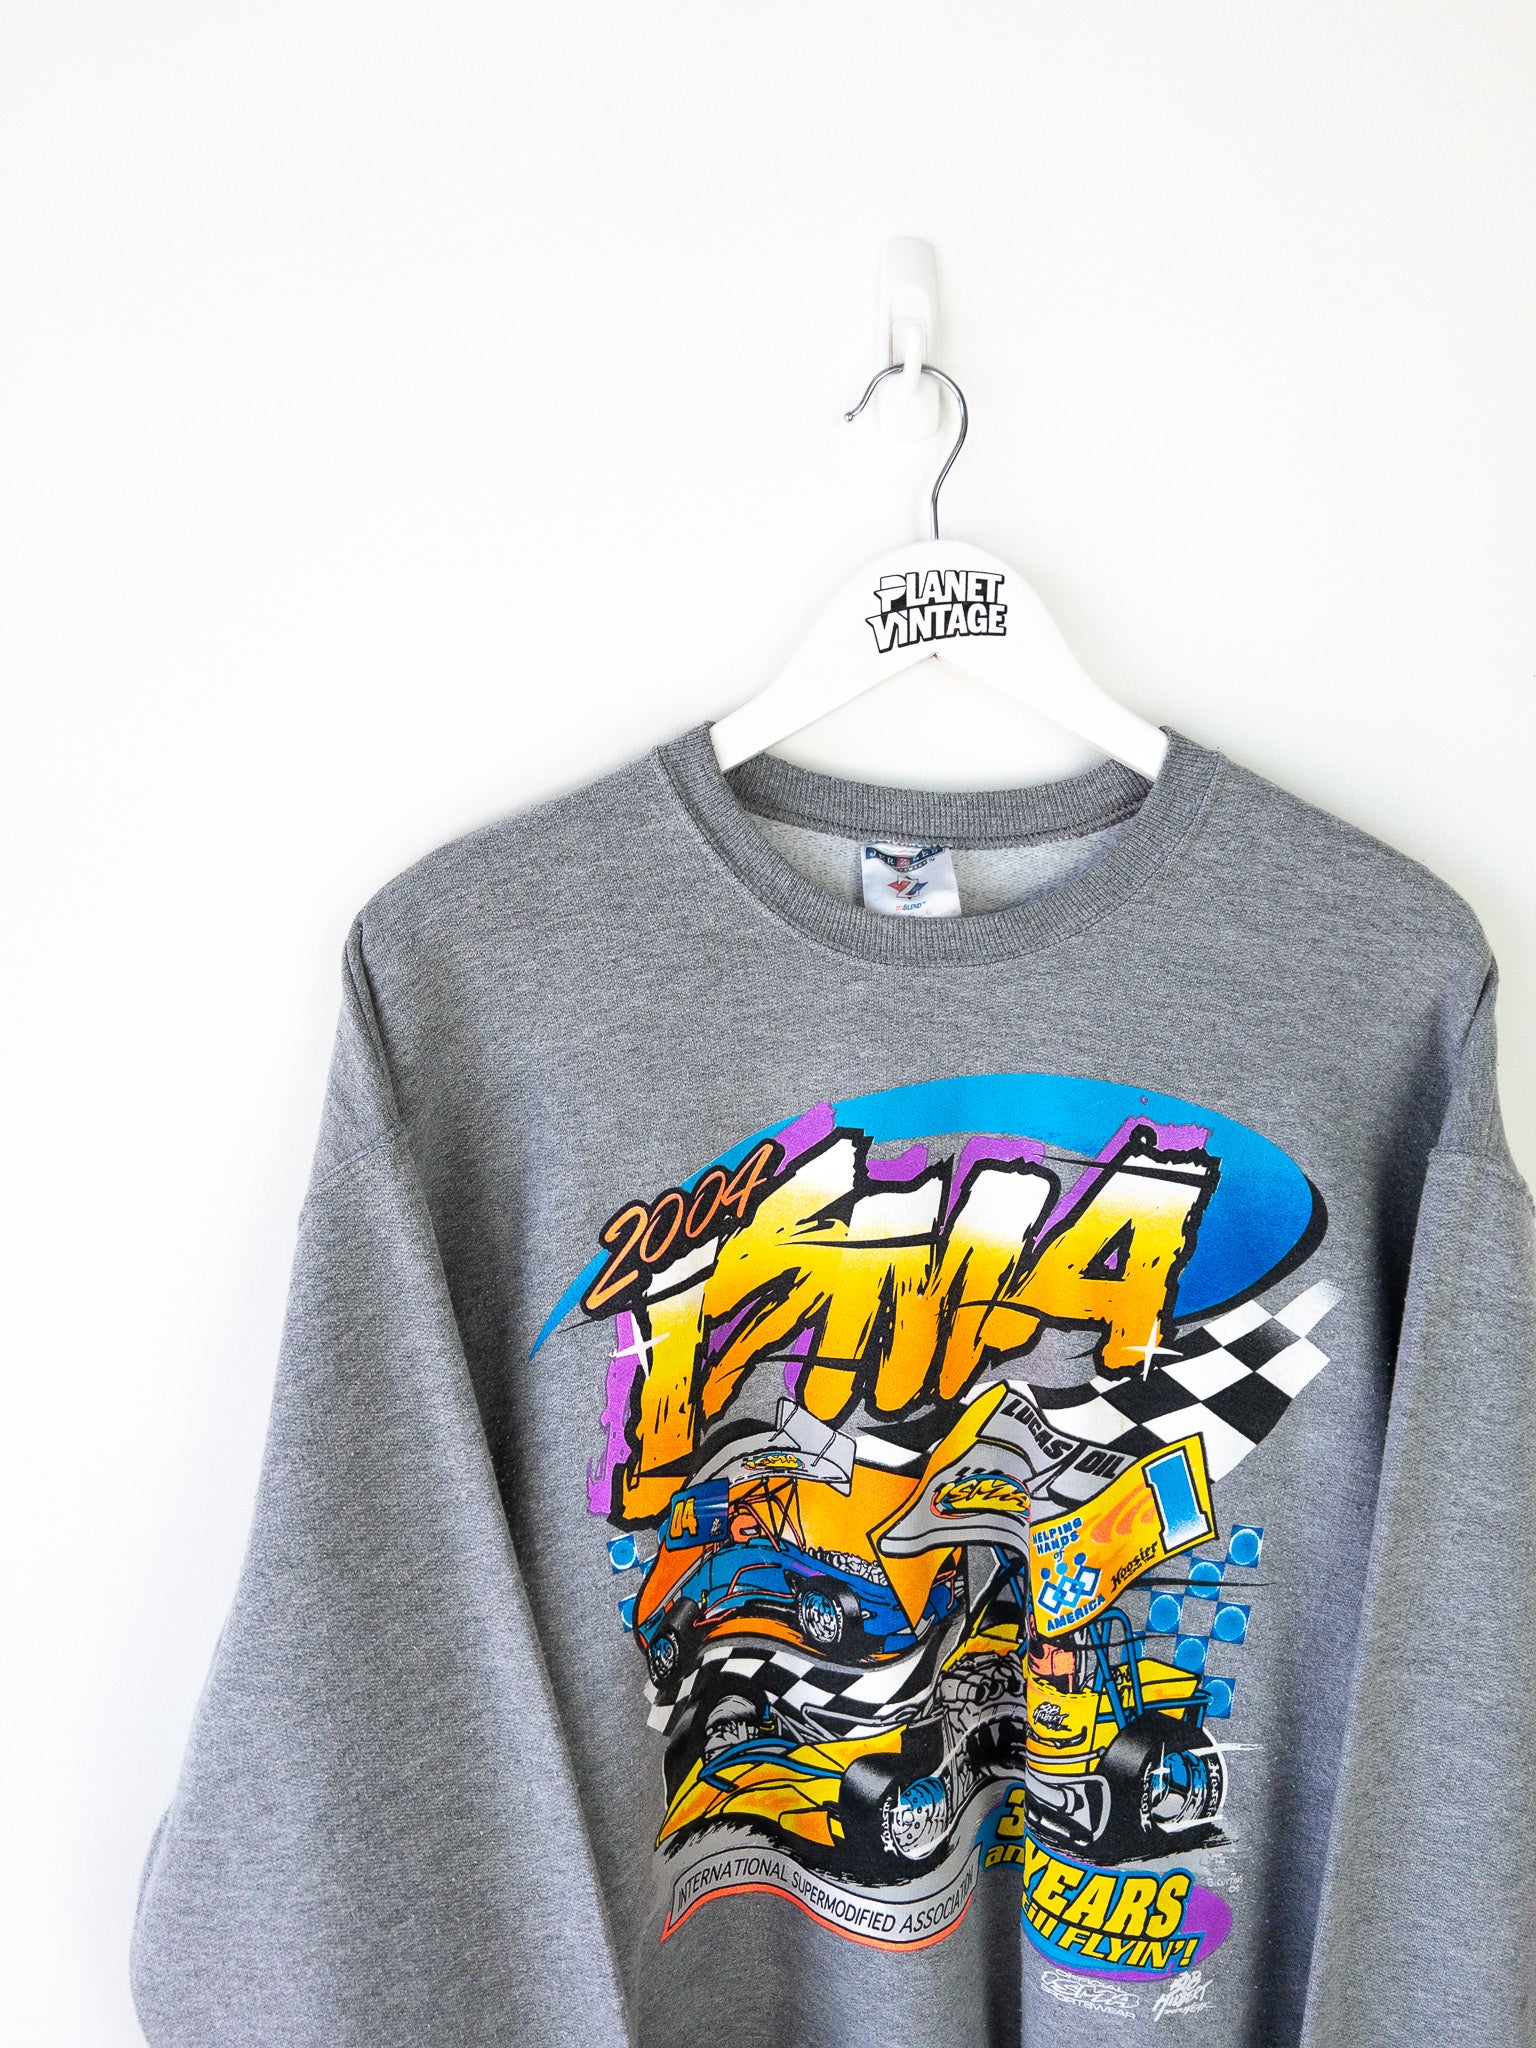 Vintage ISMA Racing Sweatshirt (L)